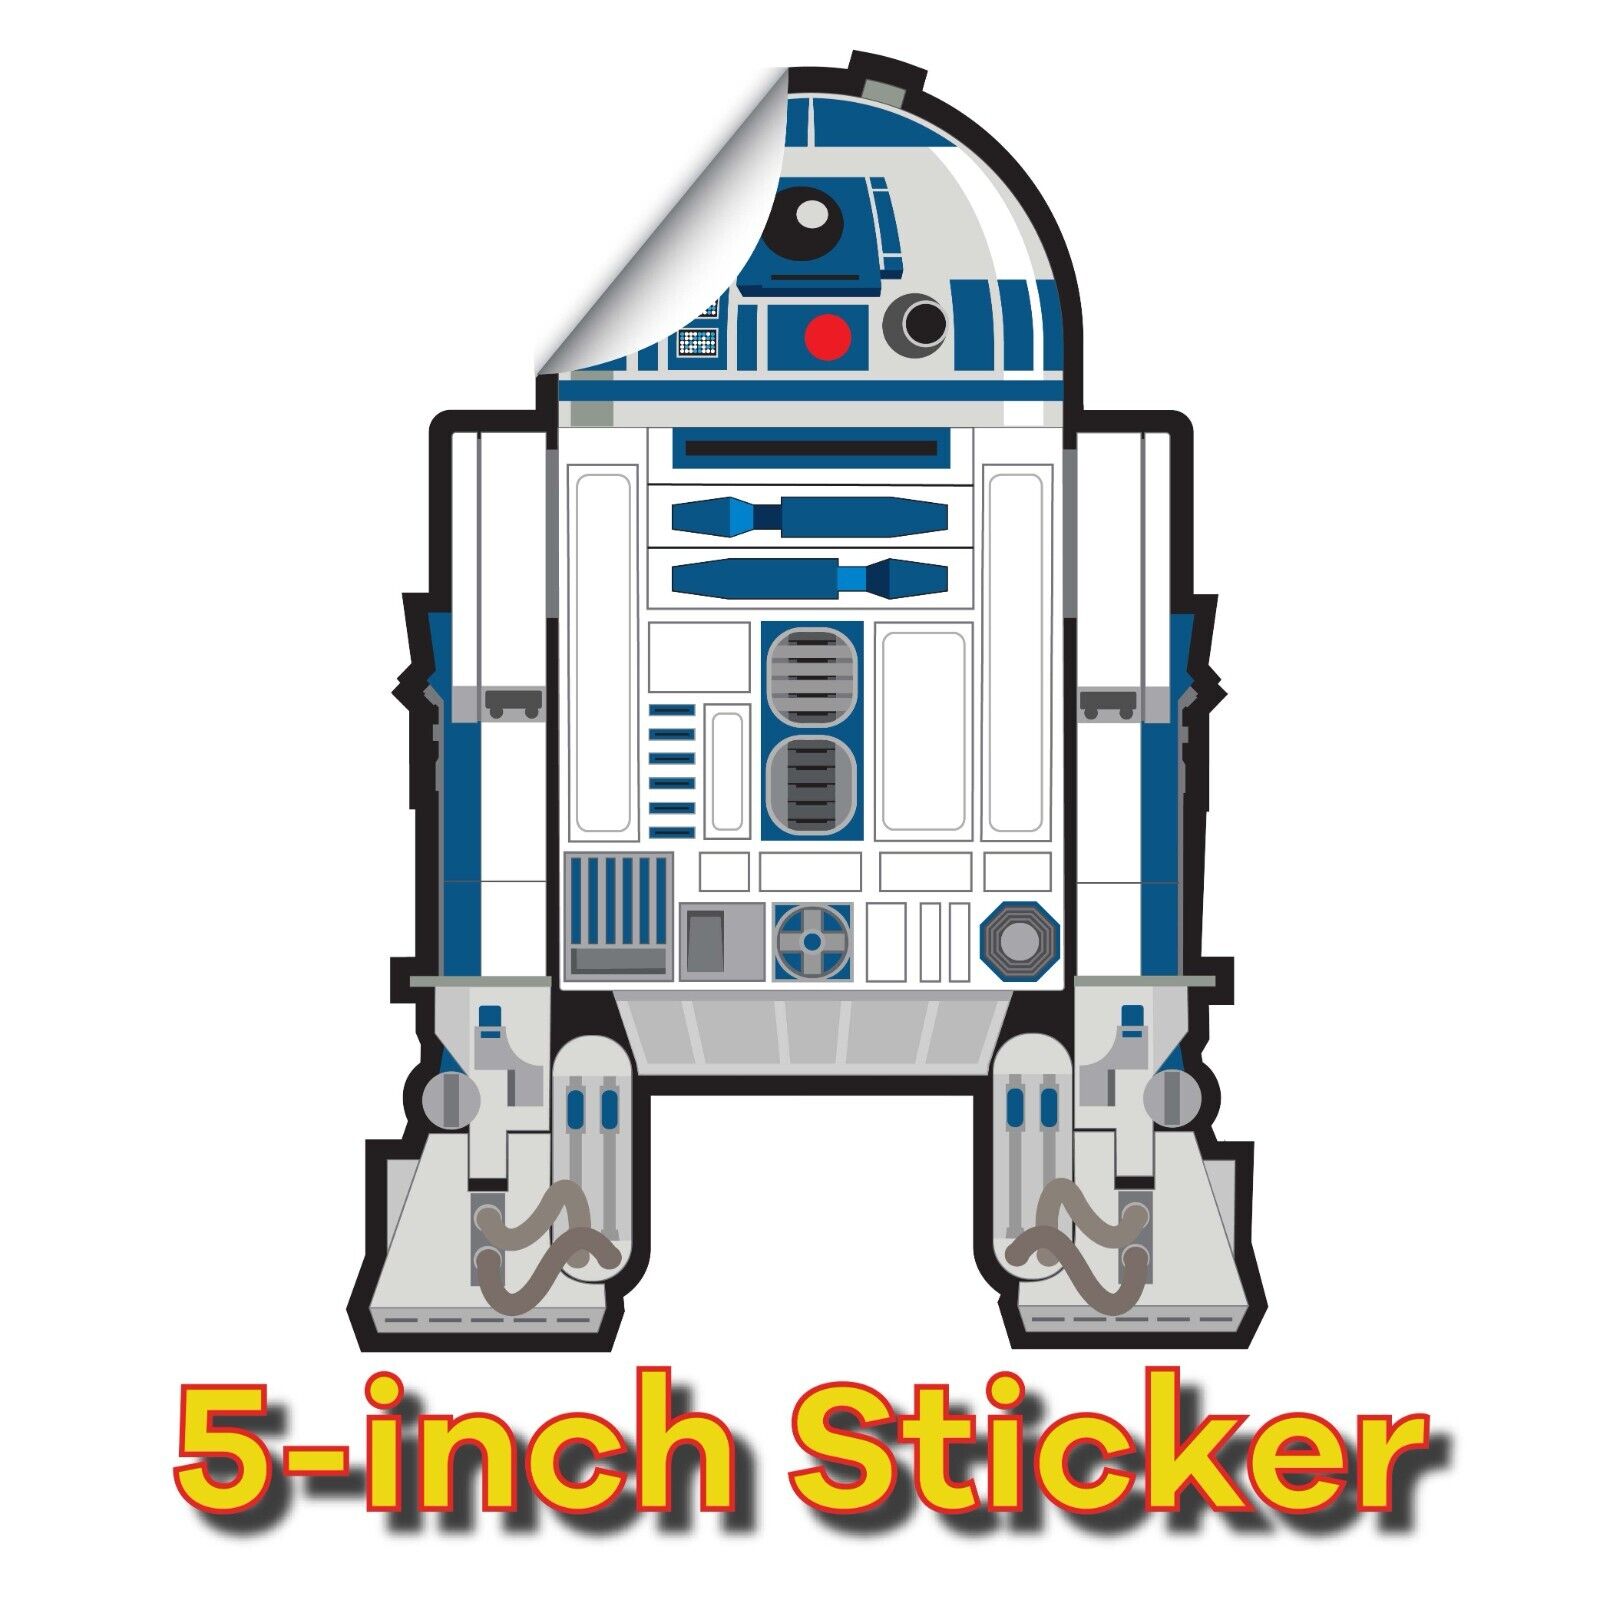 Star Wars themed Vinyl Sticker options in 3- & 5-inch size Luke Vader R2 Falcon